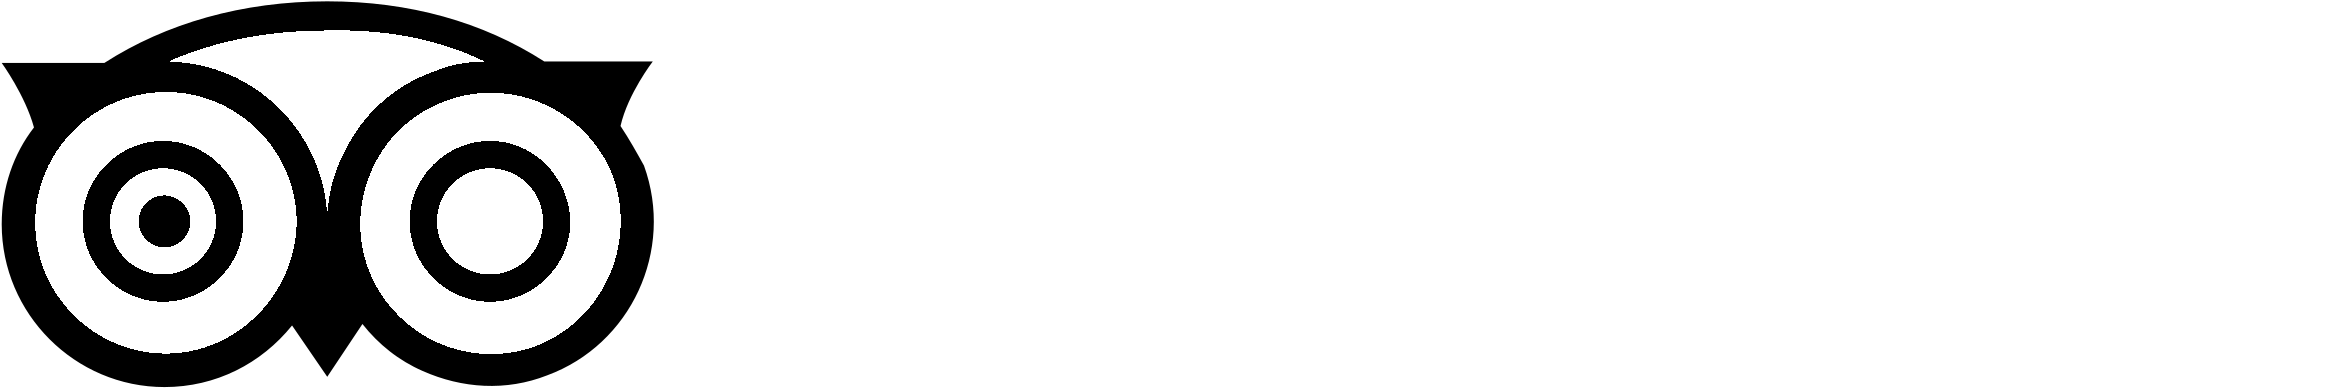 Tripadvisor Logo Black And White - Trip Advisor (2400x748), Png Download